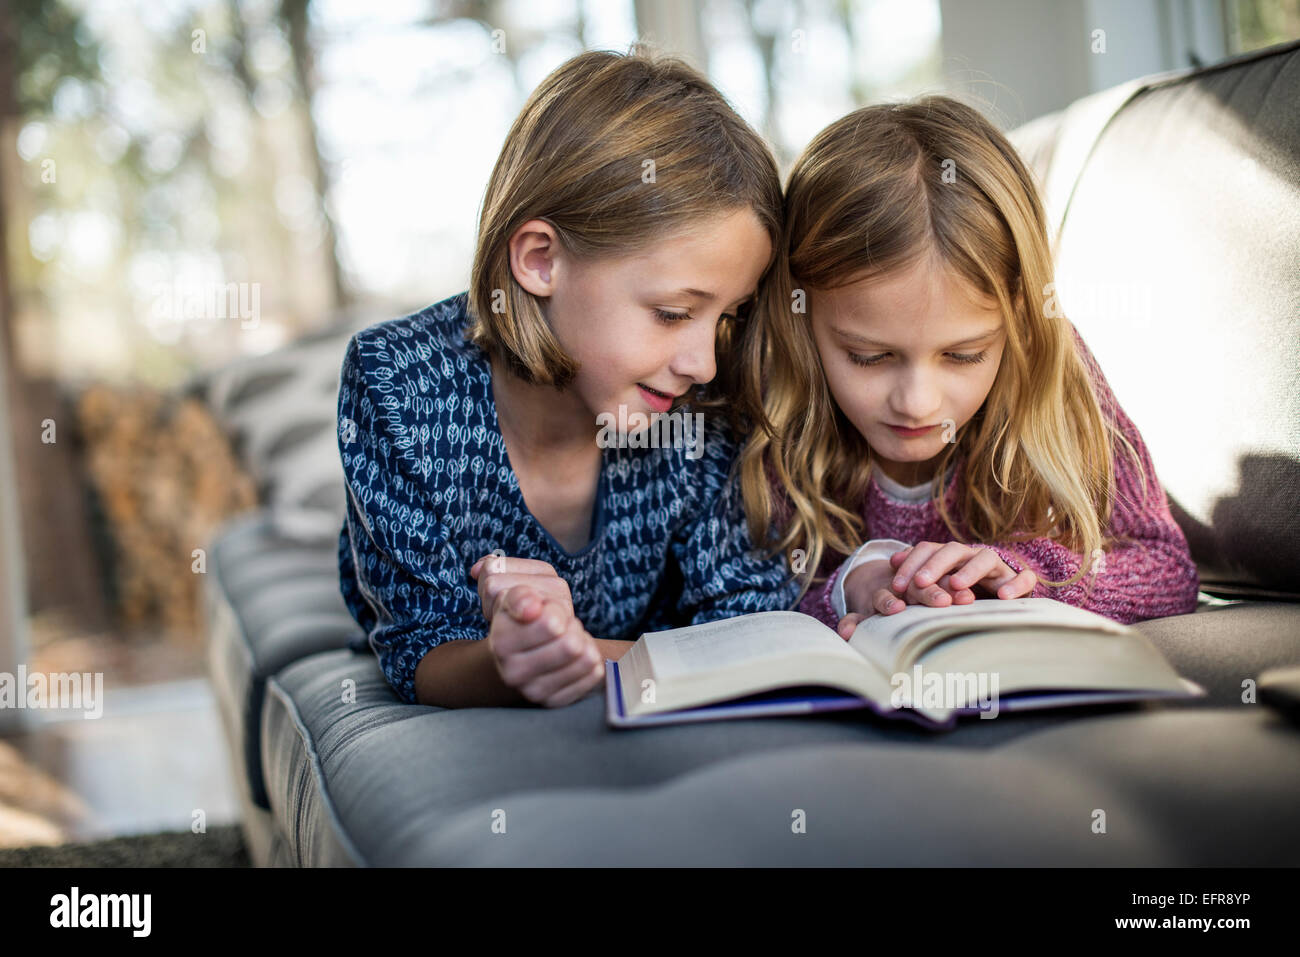 Dos chicas rubias, acostado en un sofá, mirando un libro. Foto de stock